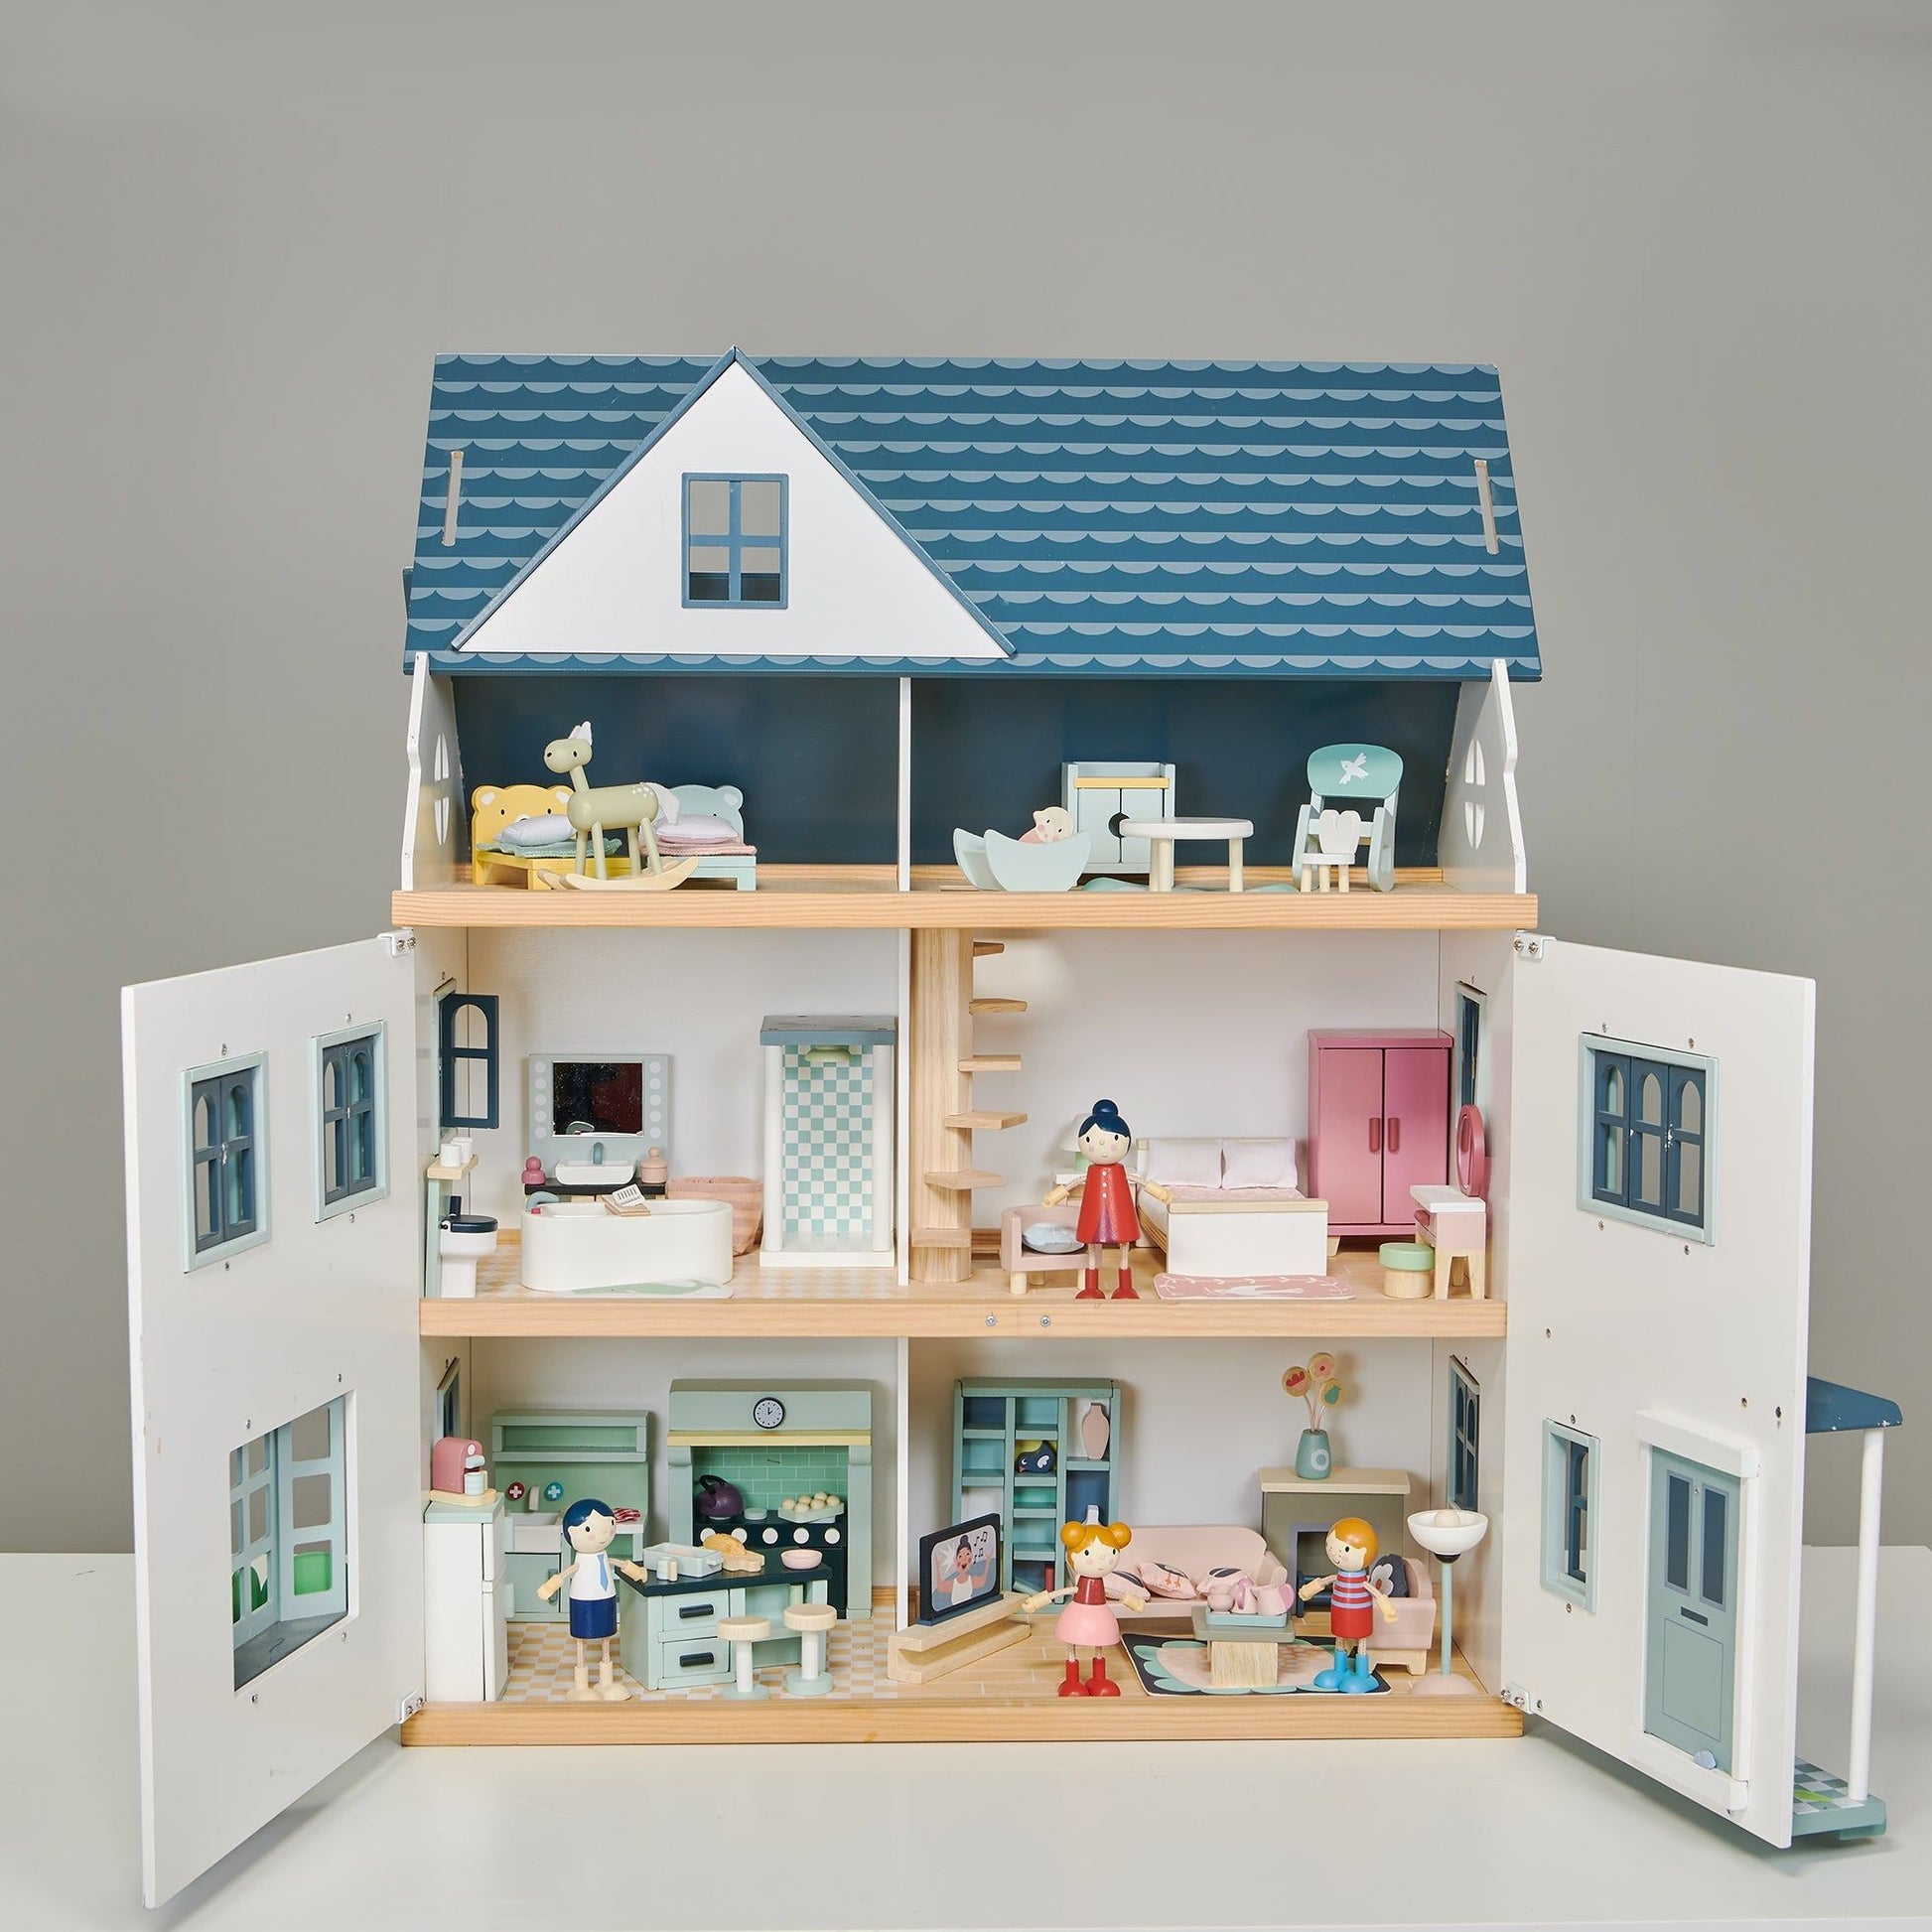 Dovetail Bundle - The Online Toy Shop - Dollhouse - 2